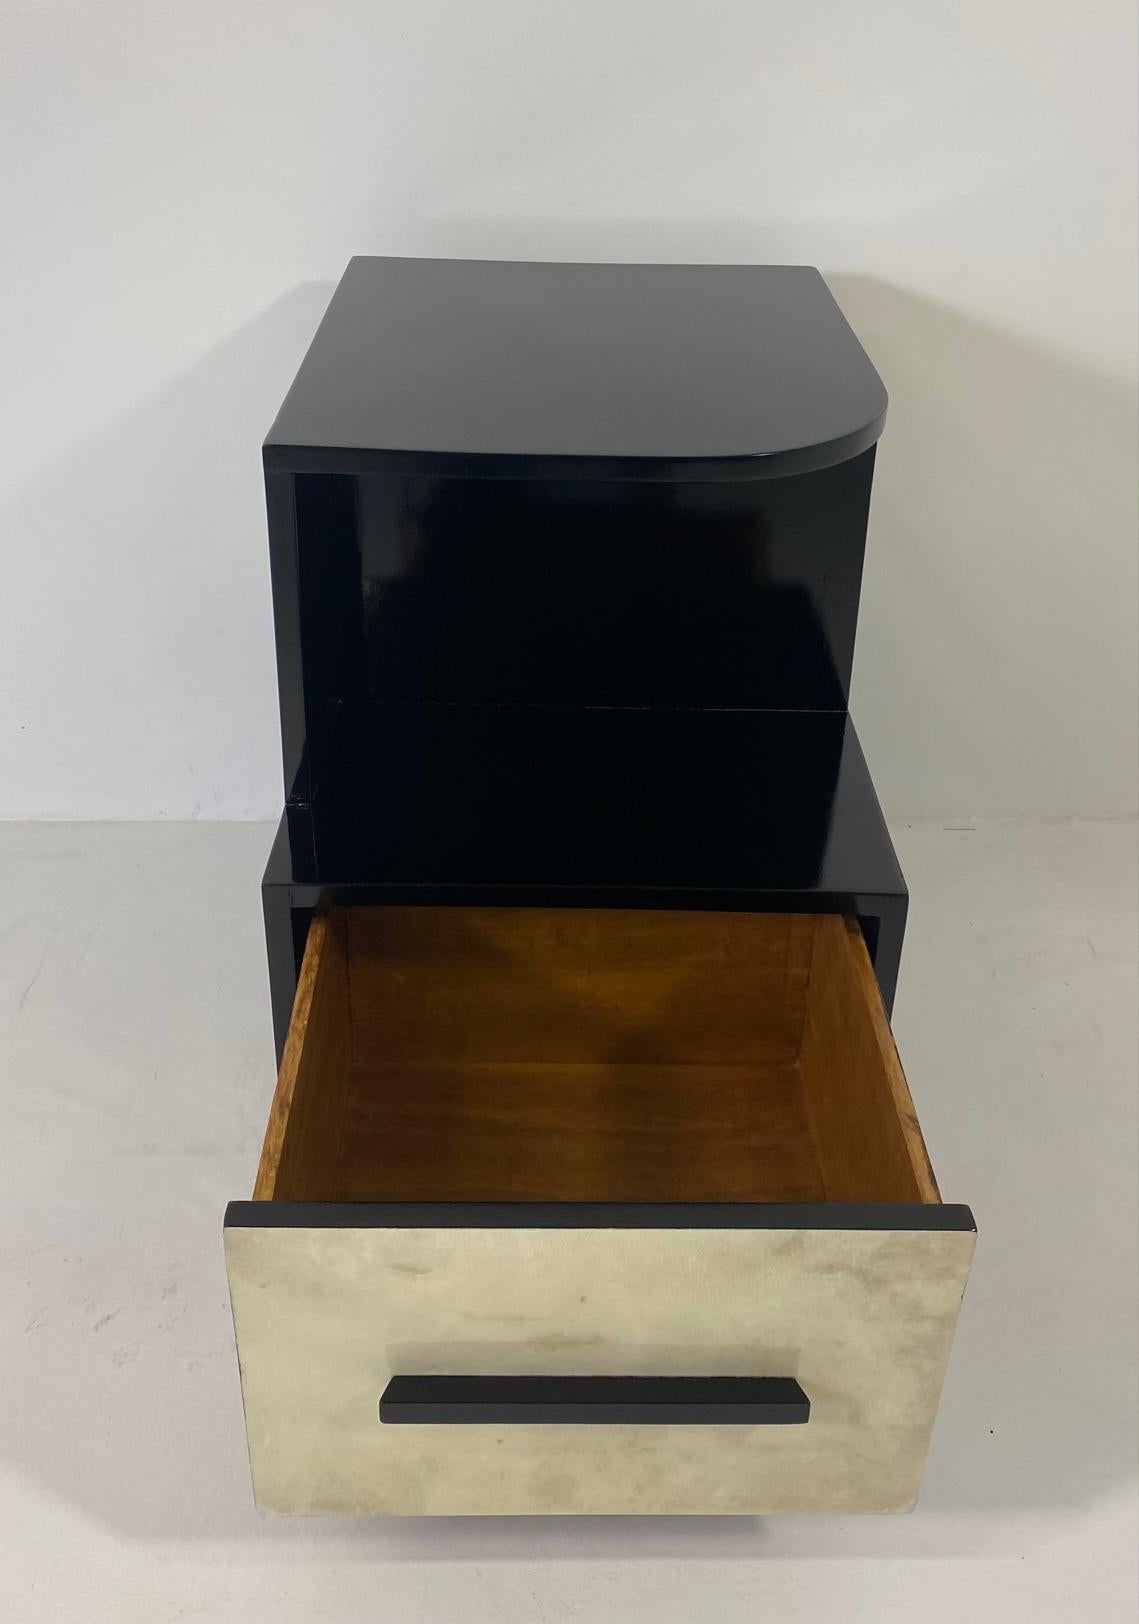 Italian Art Deco Parchment and Black Lacquer Cabinet, 1940s For Sale 2